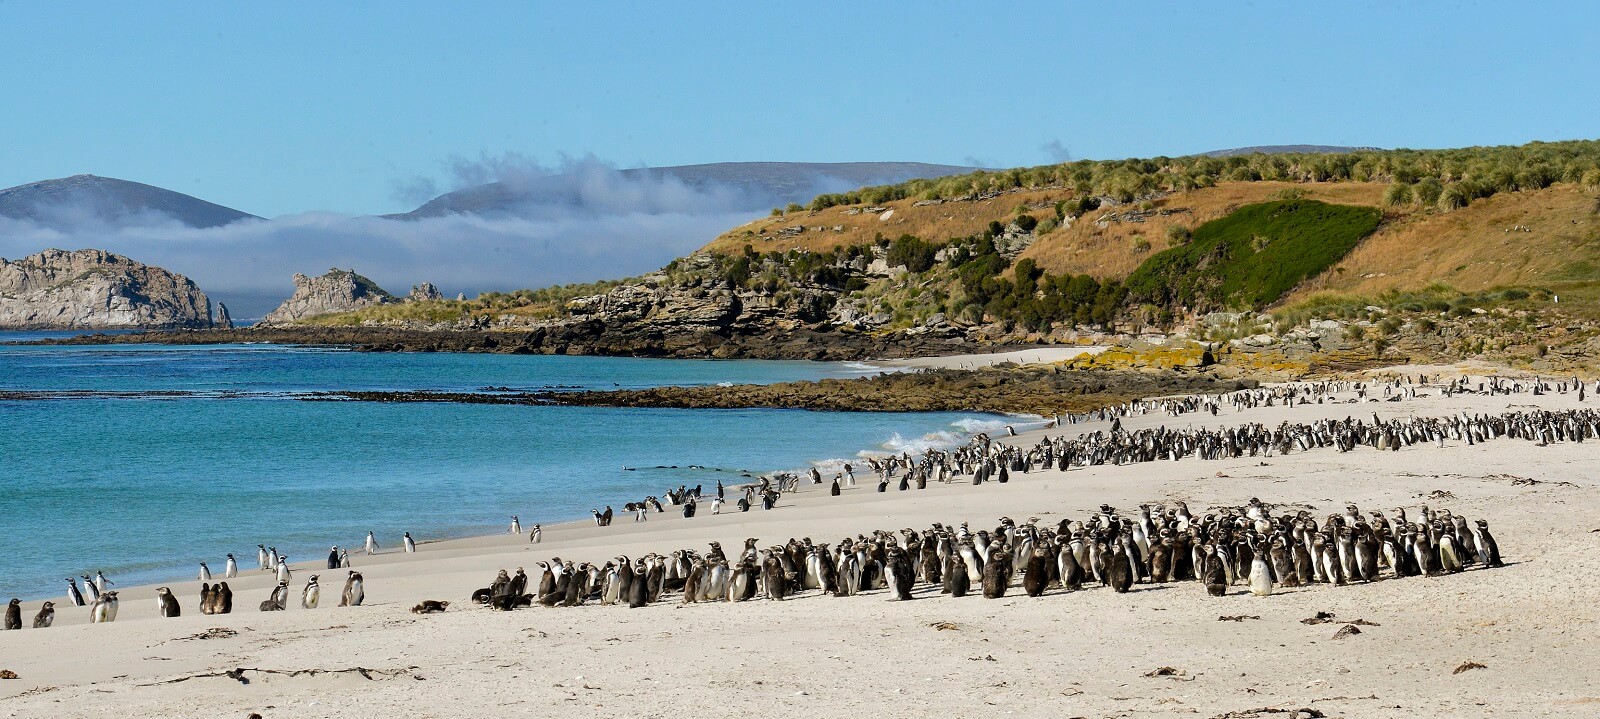 Falkland-Inseln